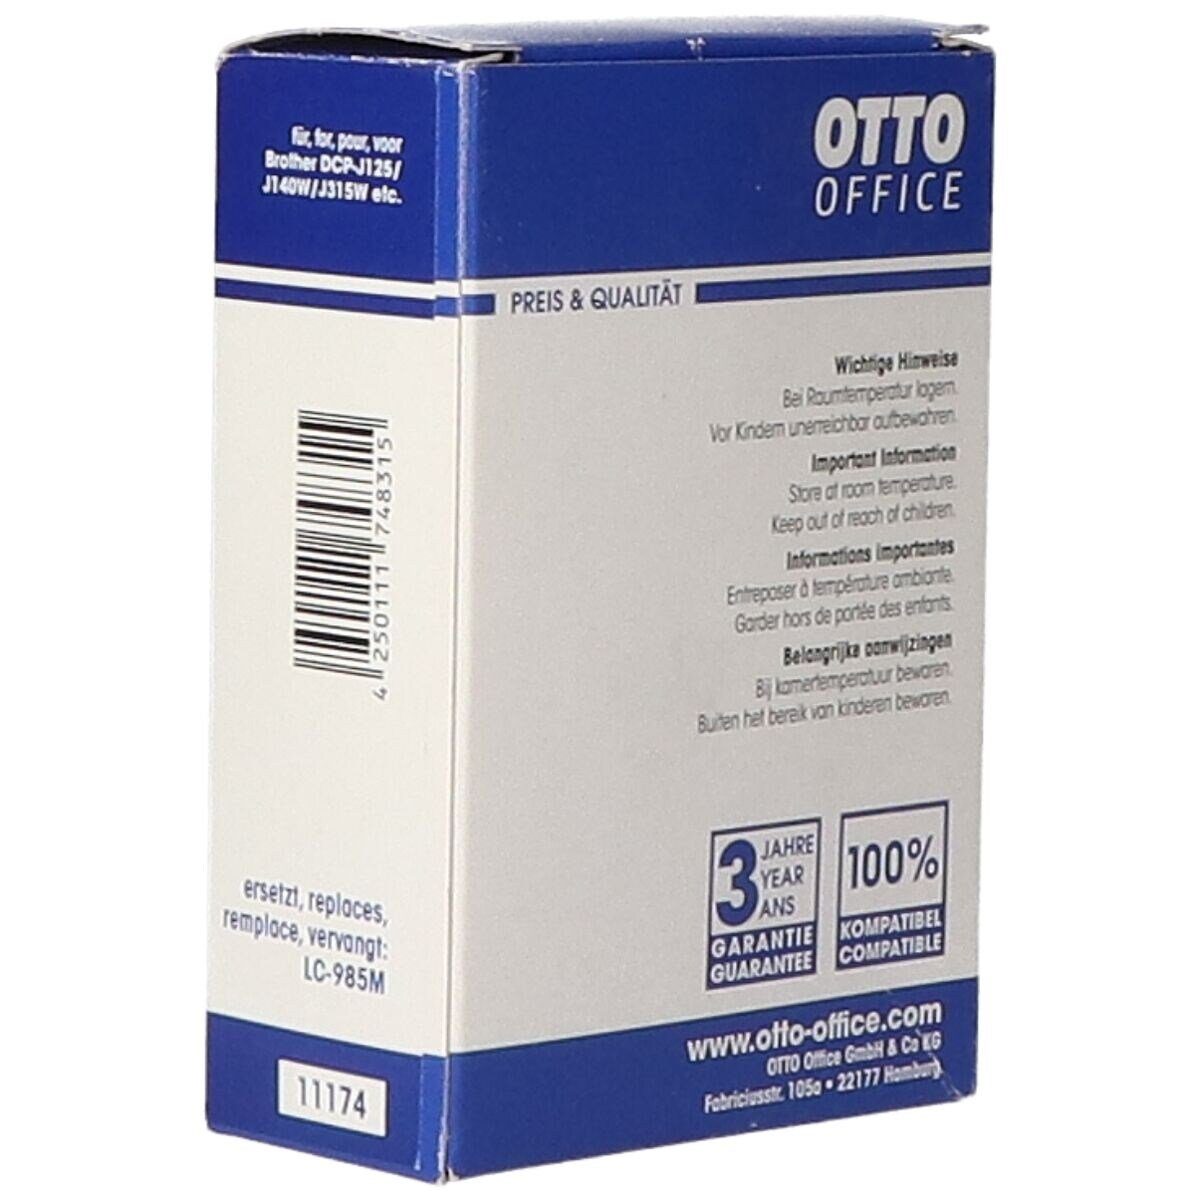 Tintenpatrone (1-tlg., ersetzt Brother Office magenta) »LC985M«, Office Otto